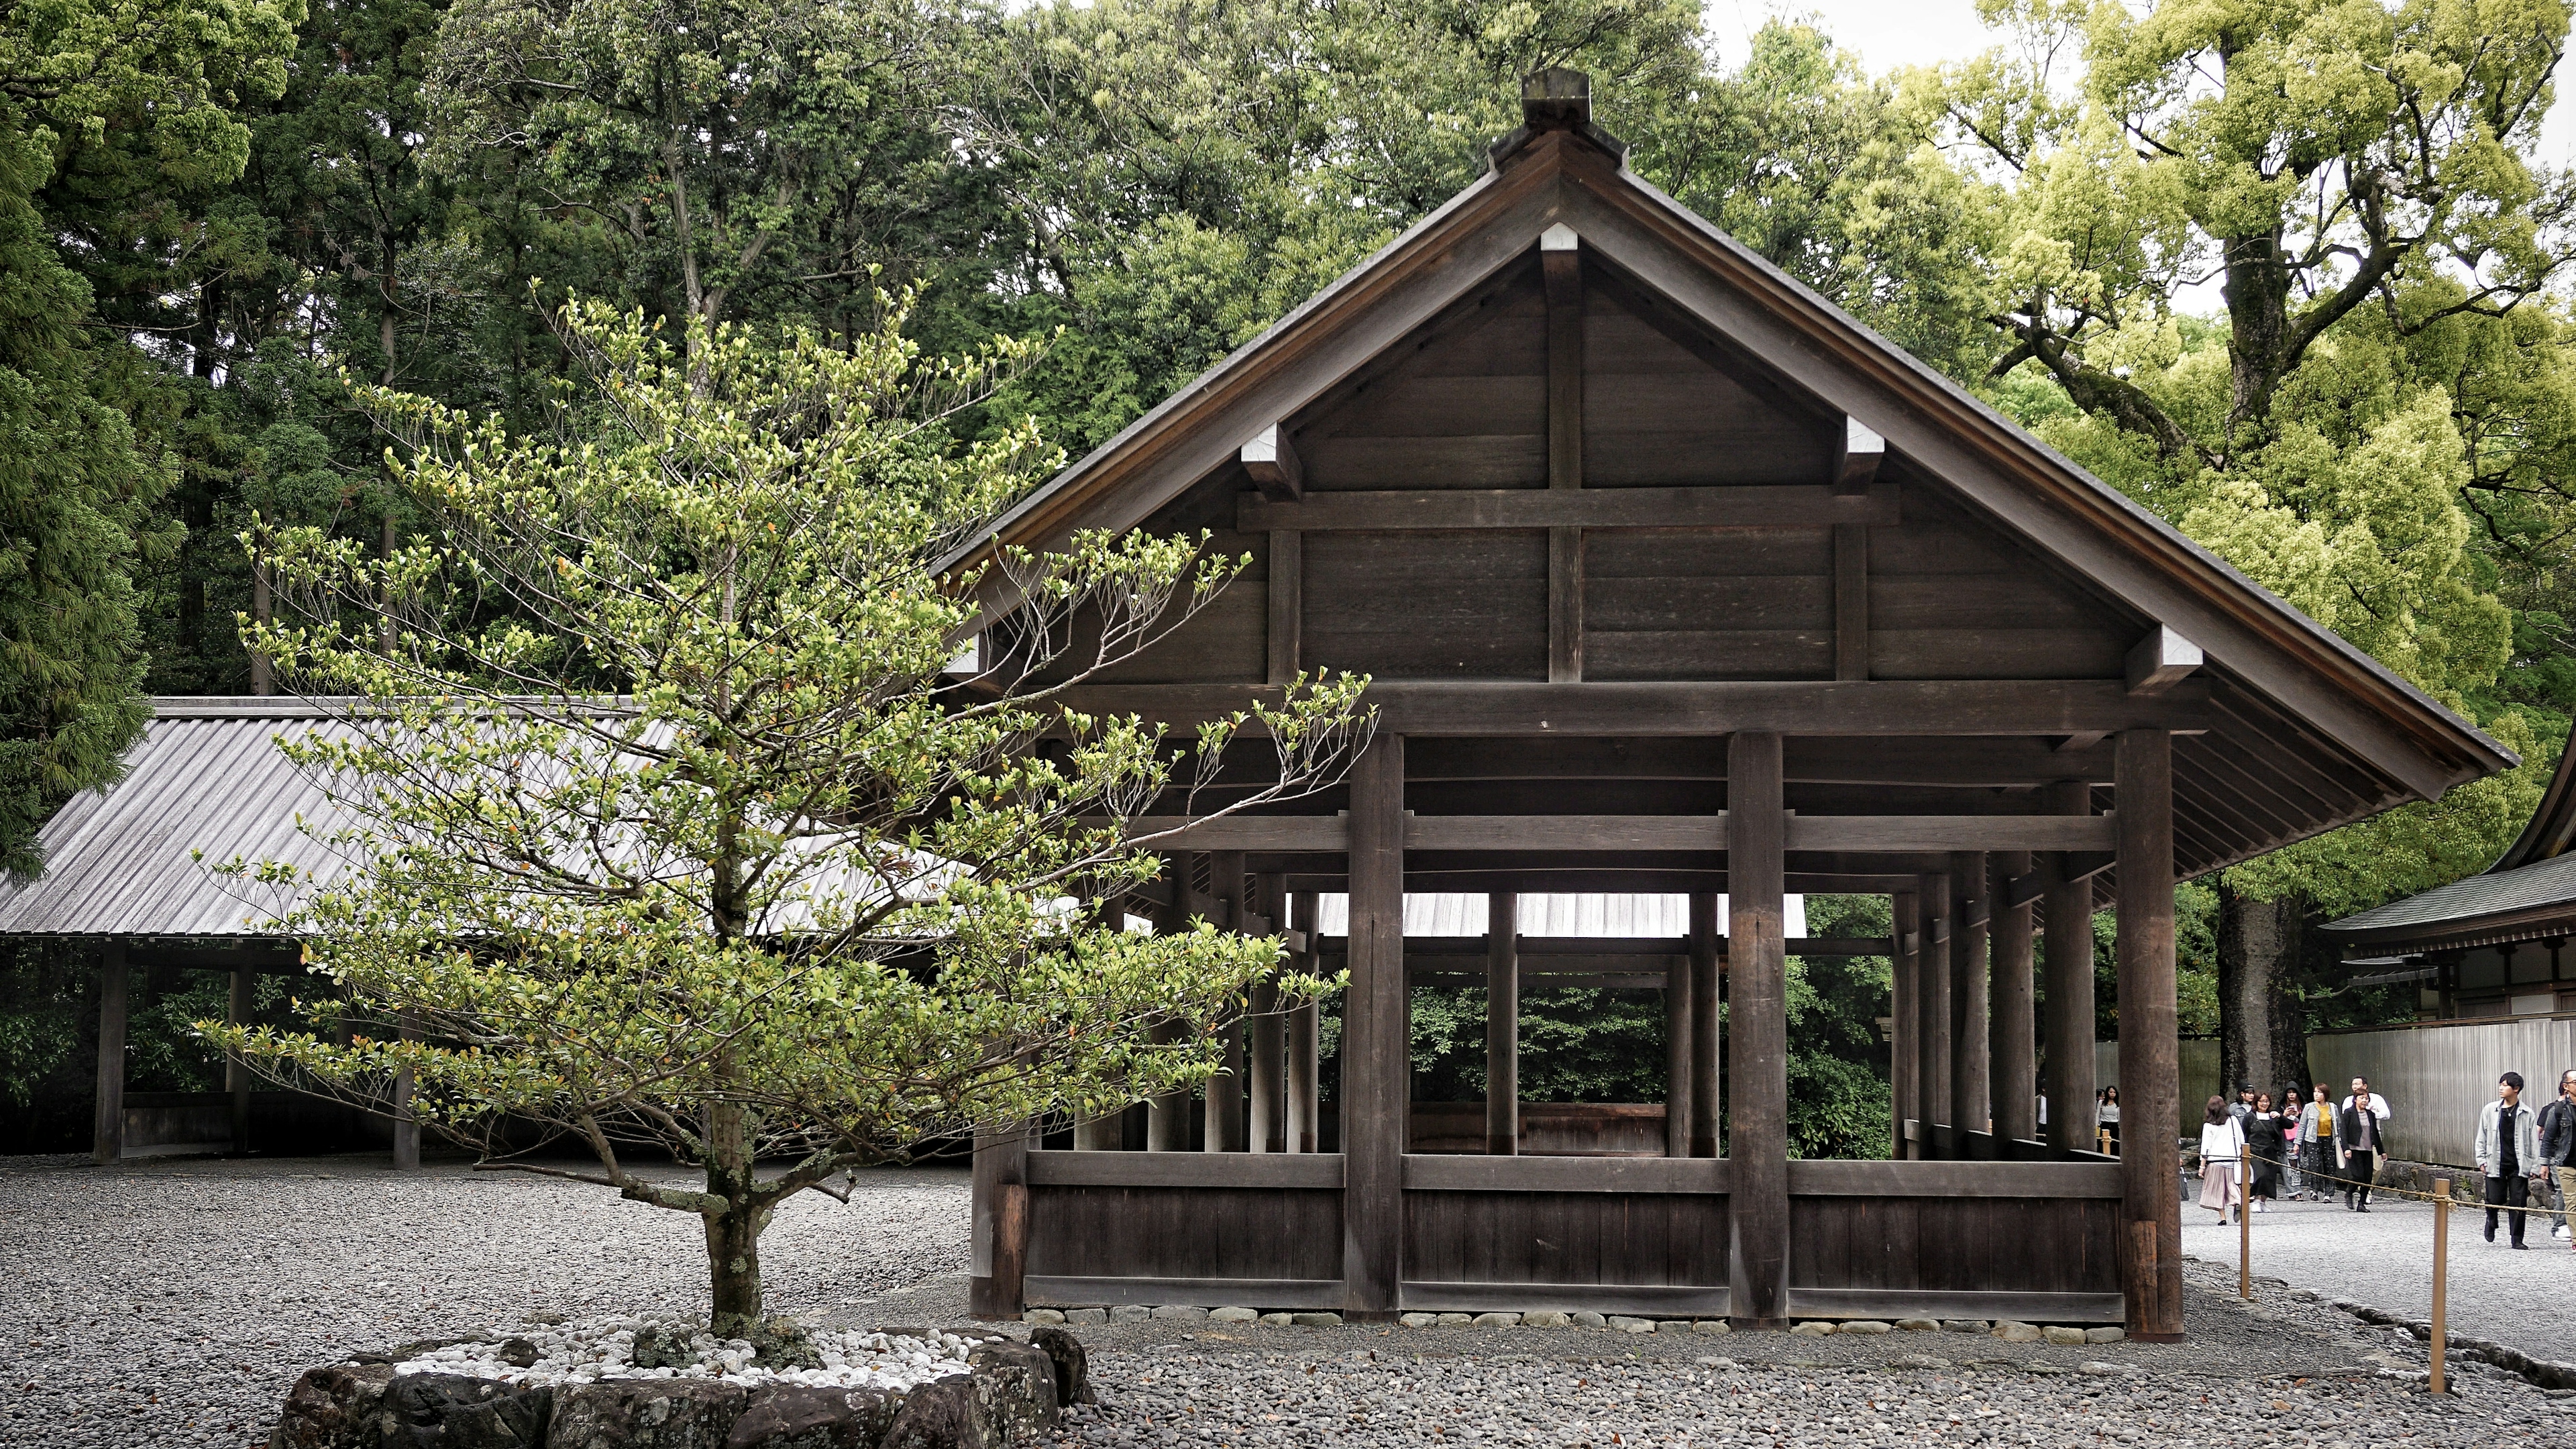 A wooden shrine building at Ise Jingu